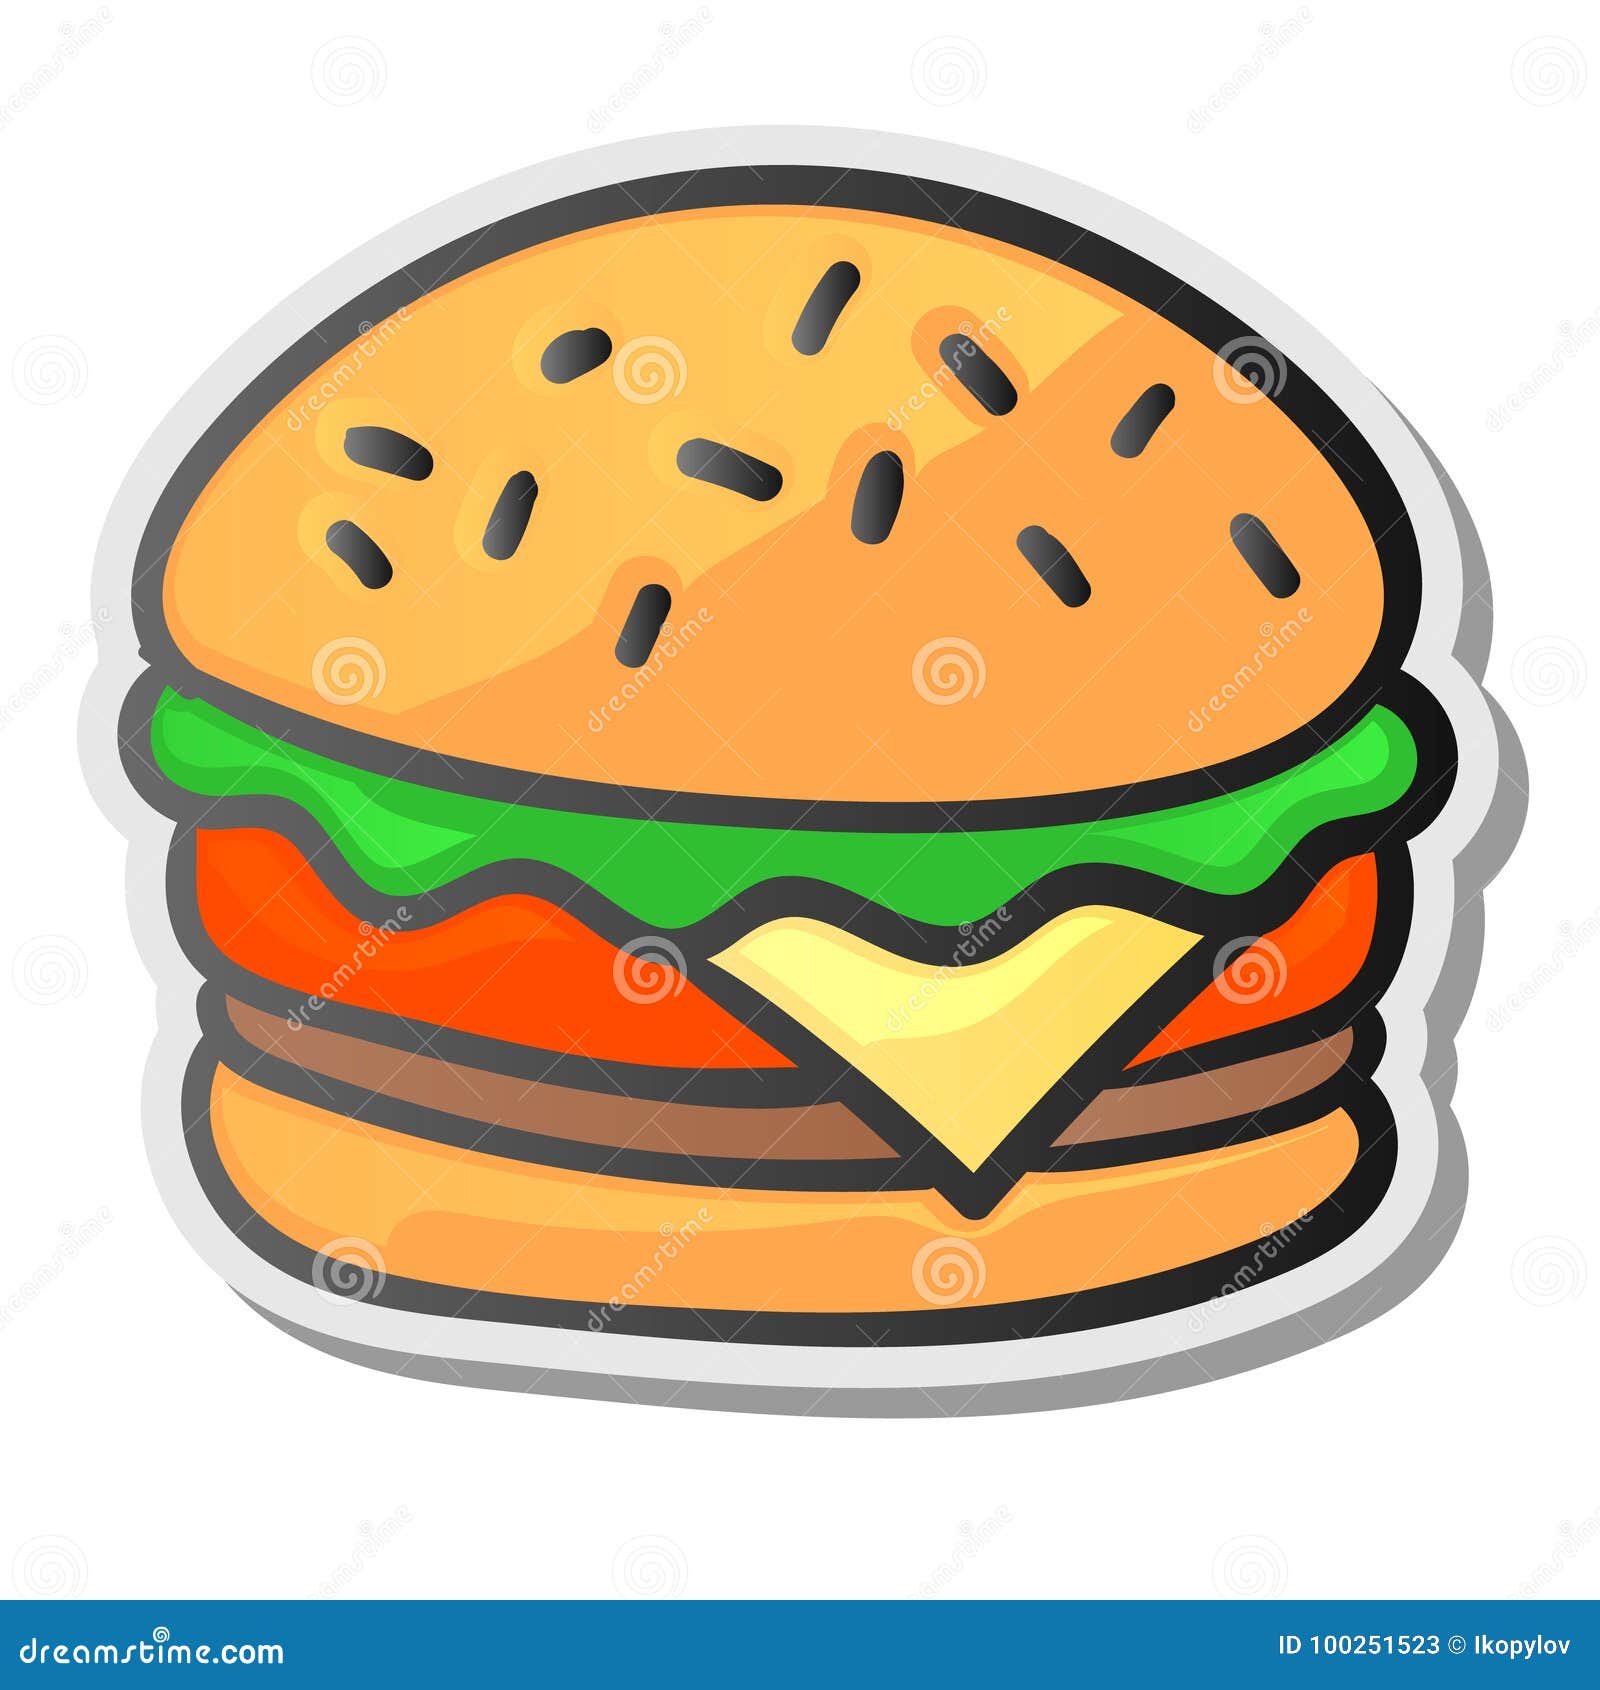 https://thumbs.dreamstime.com/z/burger-sticker-isolated-background-burger-sticker-isolated-background-graphic-design-element-menu-packaging-advertising-poster-100251523.jpg